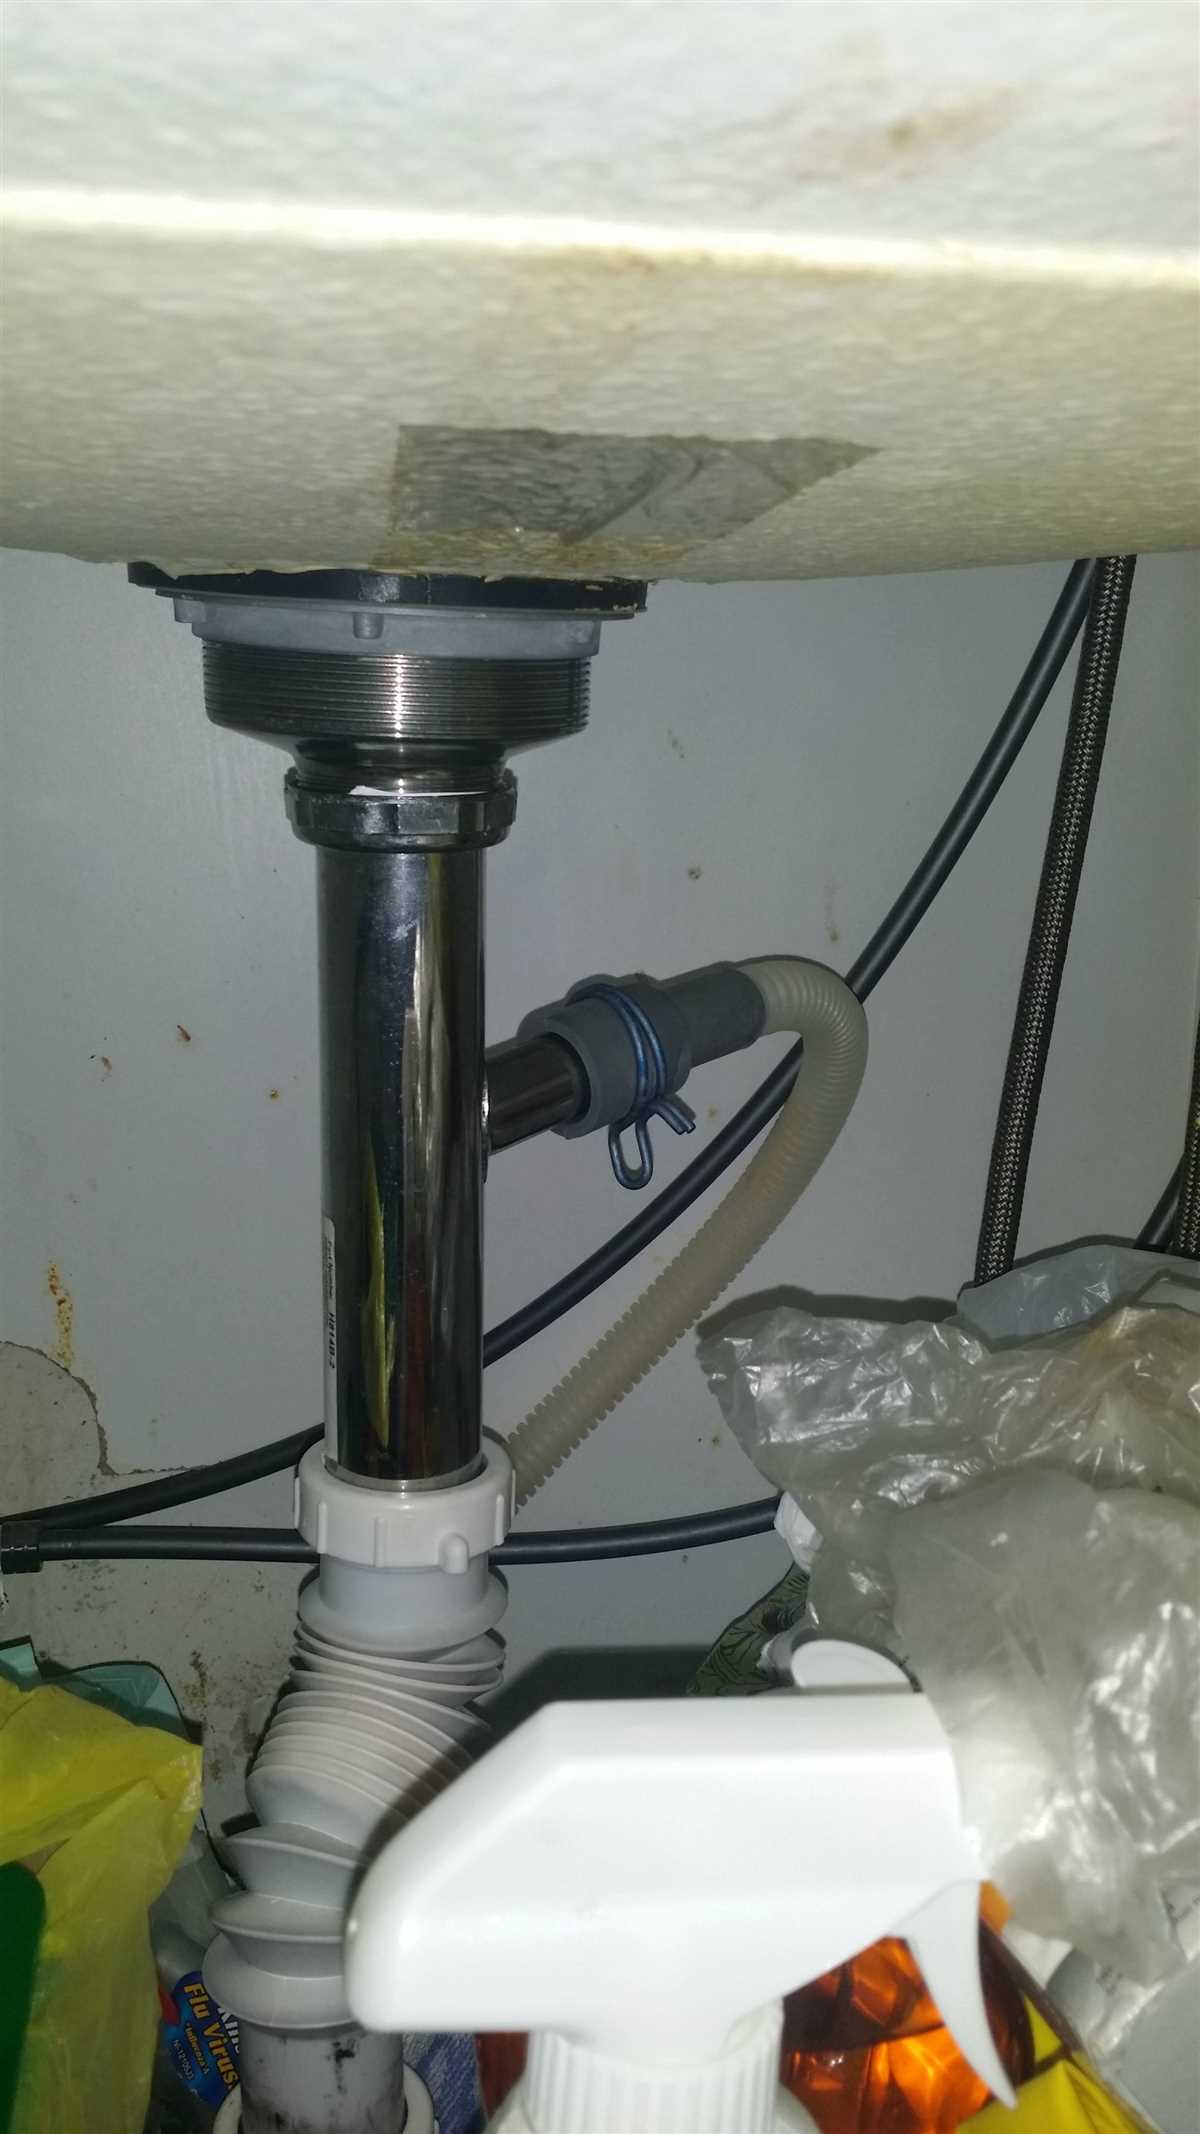 1. Faulty plumbing connections: